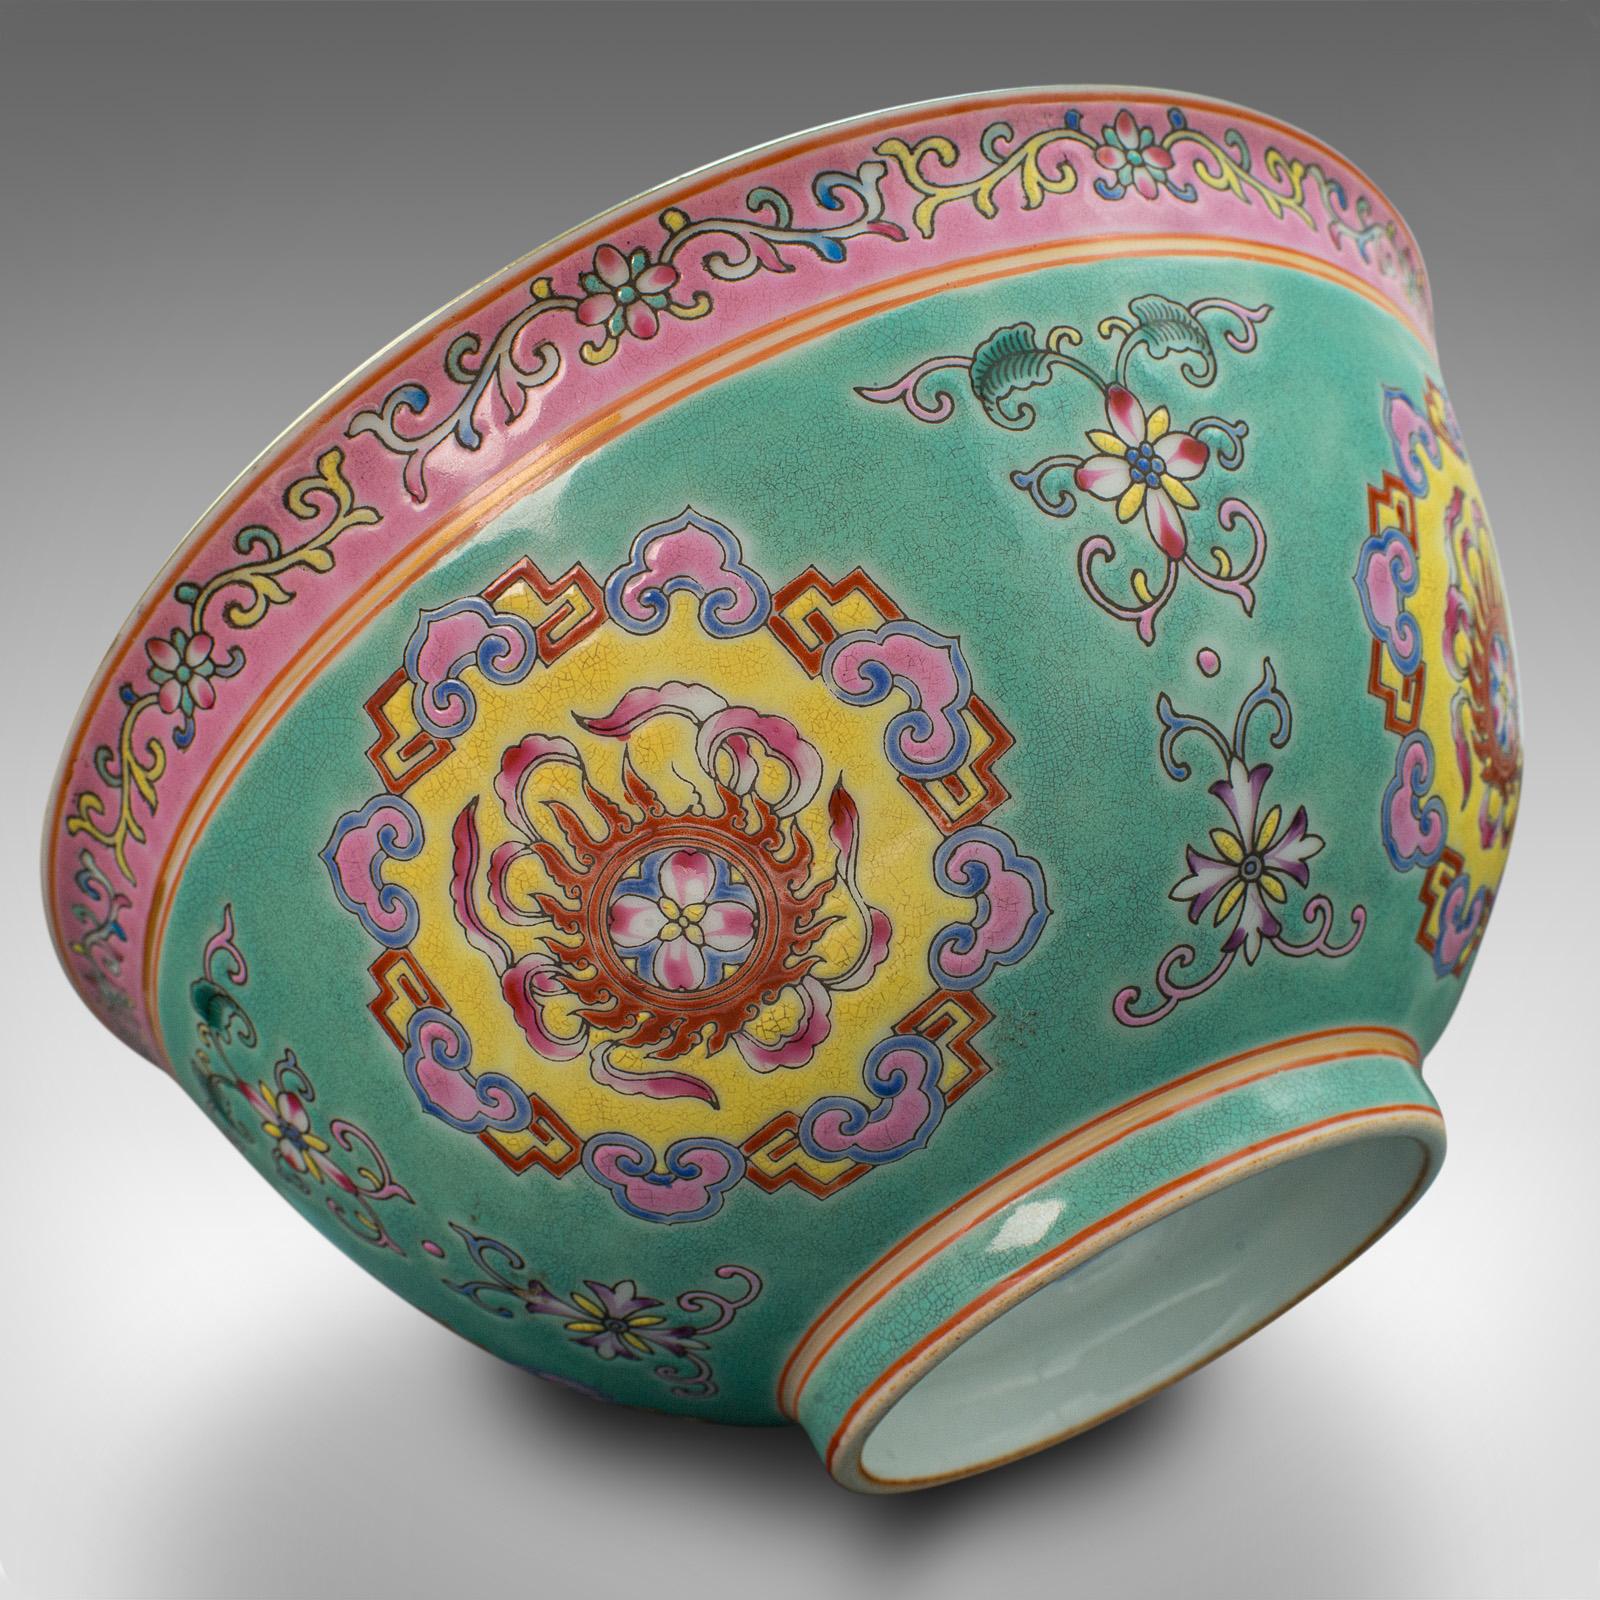 Antique Famille Rose Decorative Bowl, Chinese, Ceramic, Rice Dish, Victorian 1